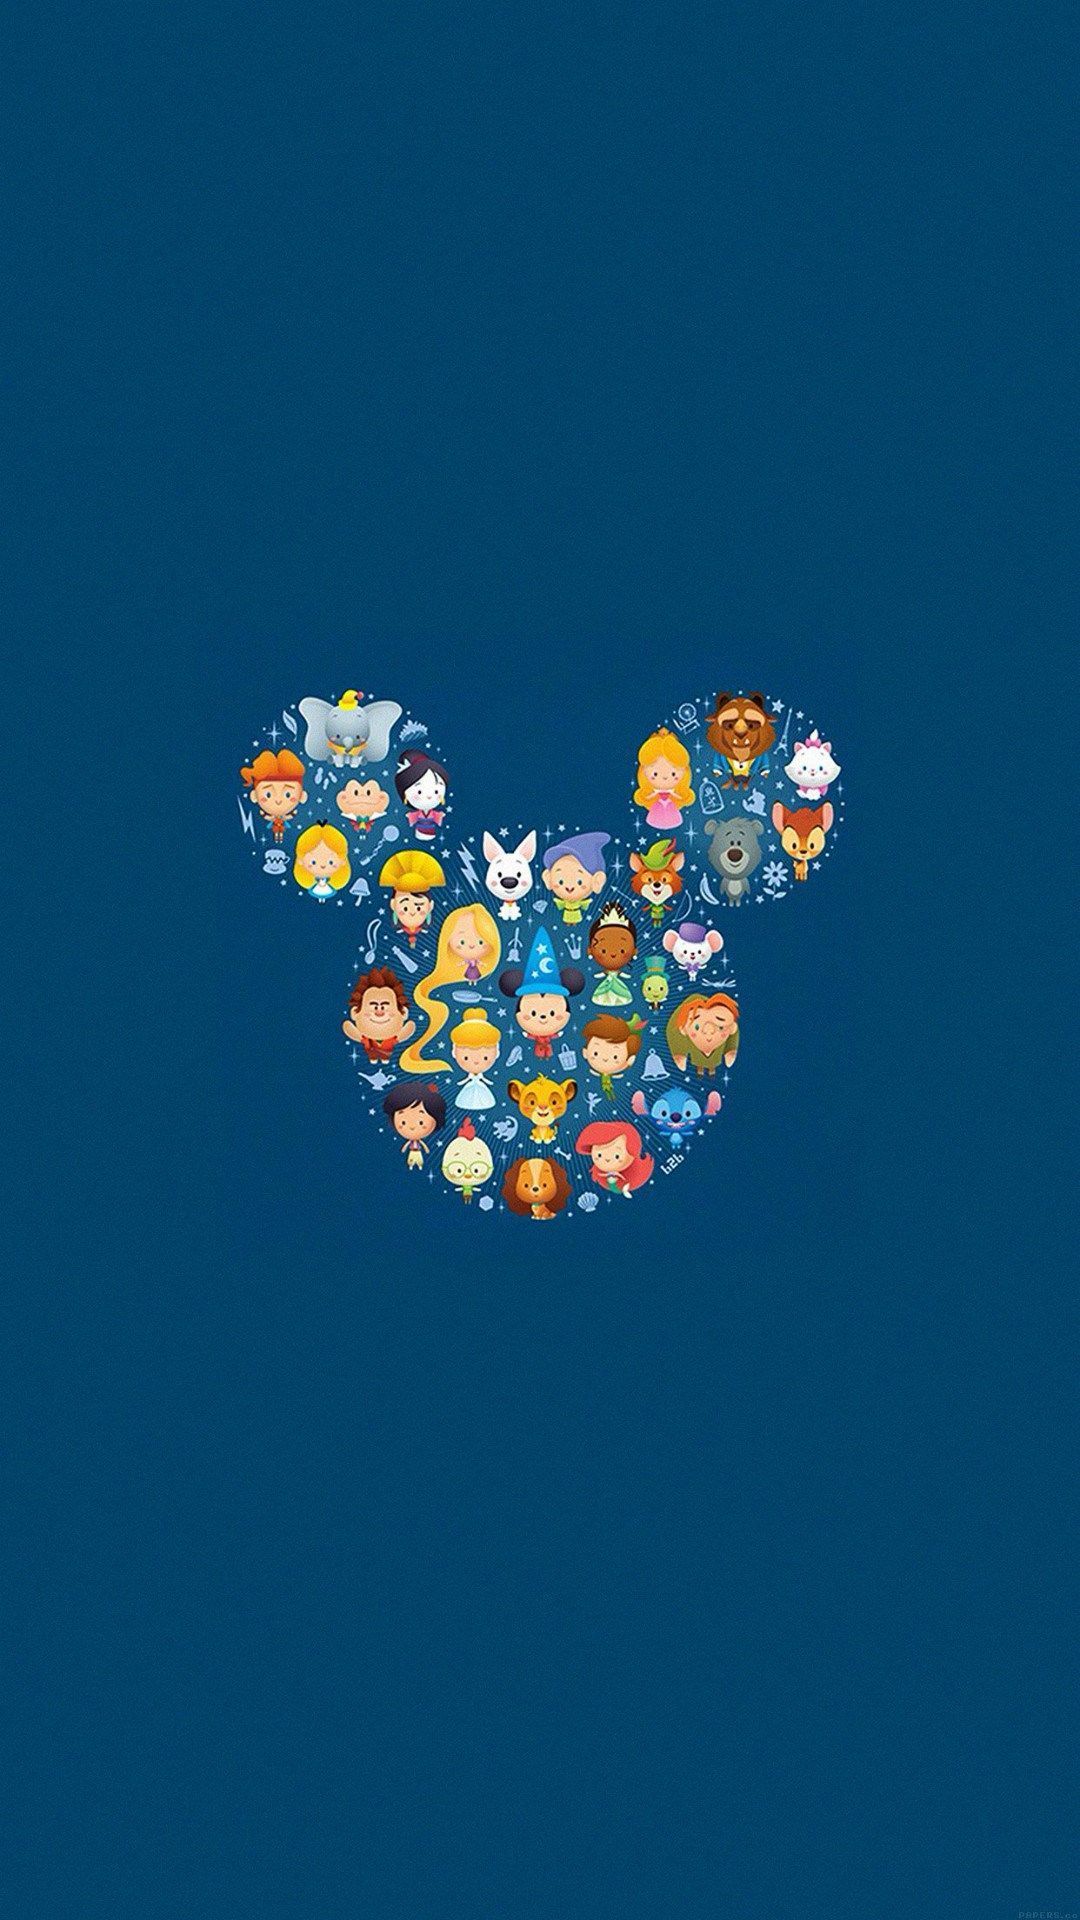 Disney Characters iPhone Wallpaper Free Disney Characters iPhone Background